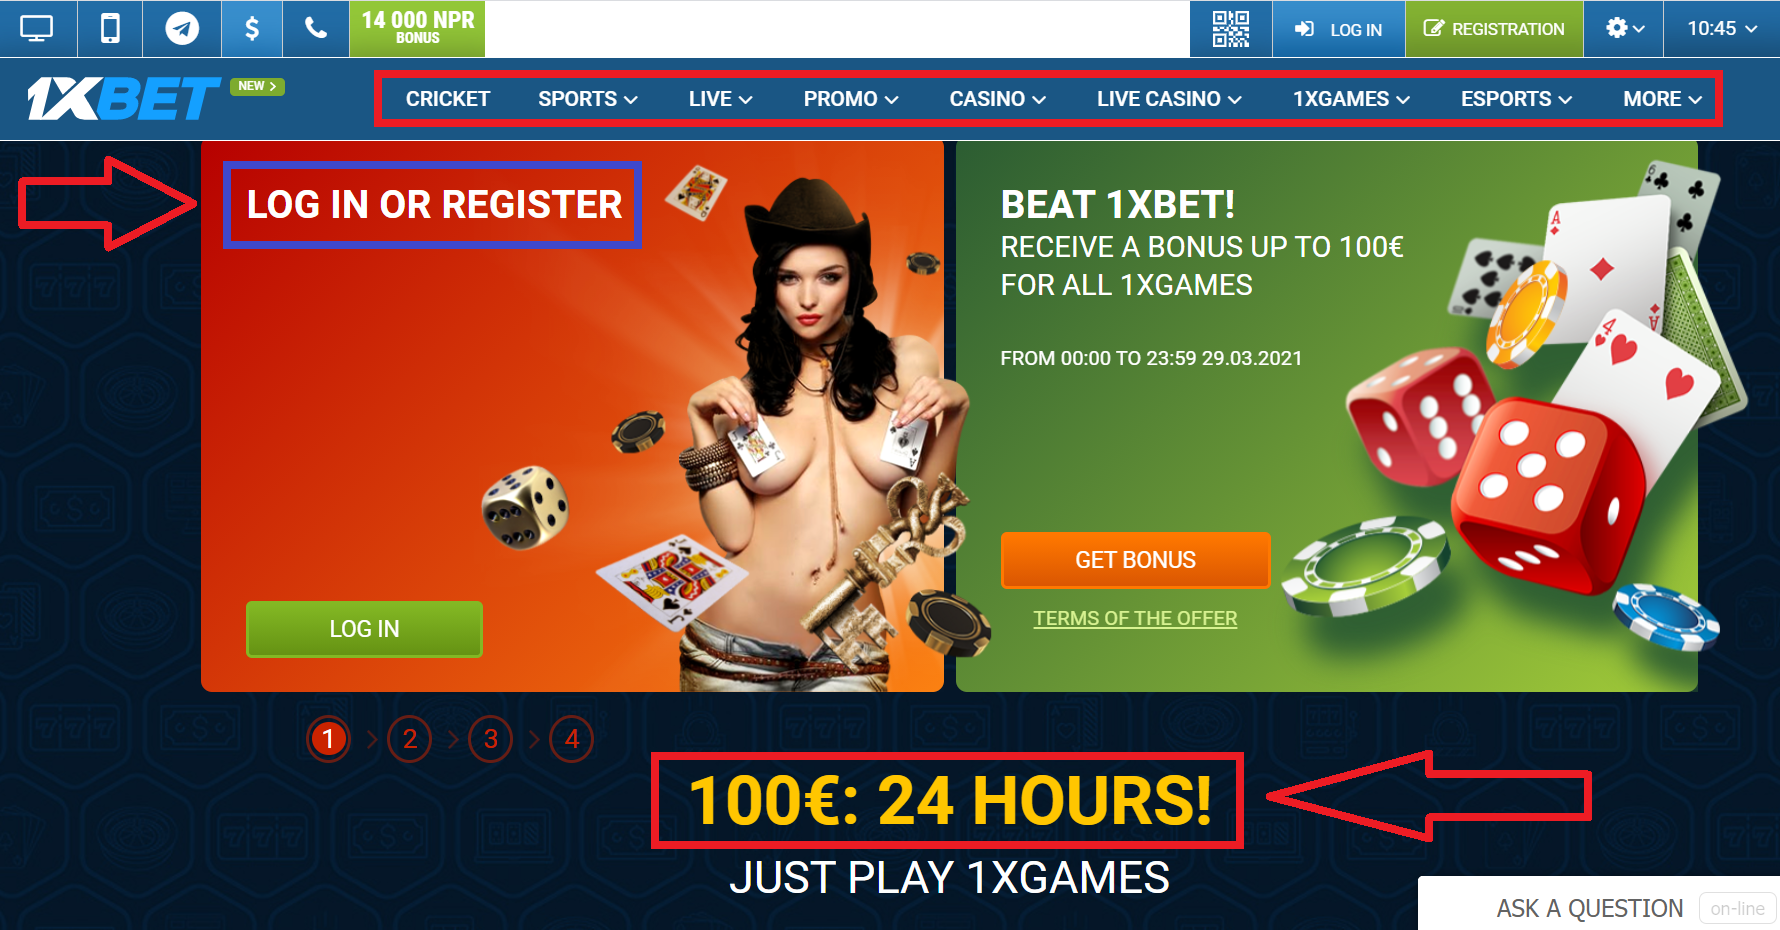 Registration bonus in the Casino section of the 1XBET platform